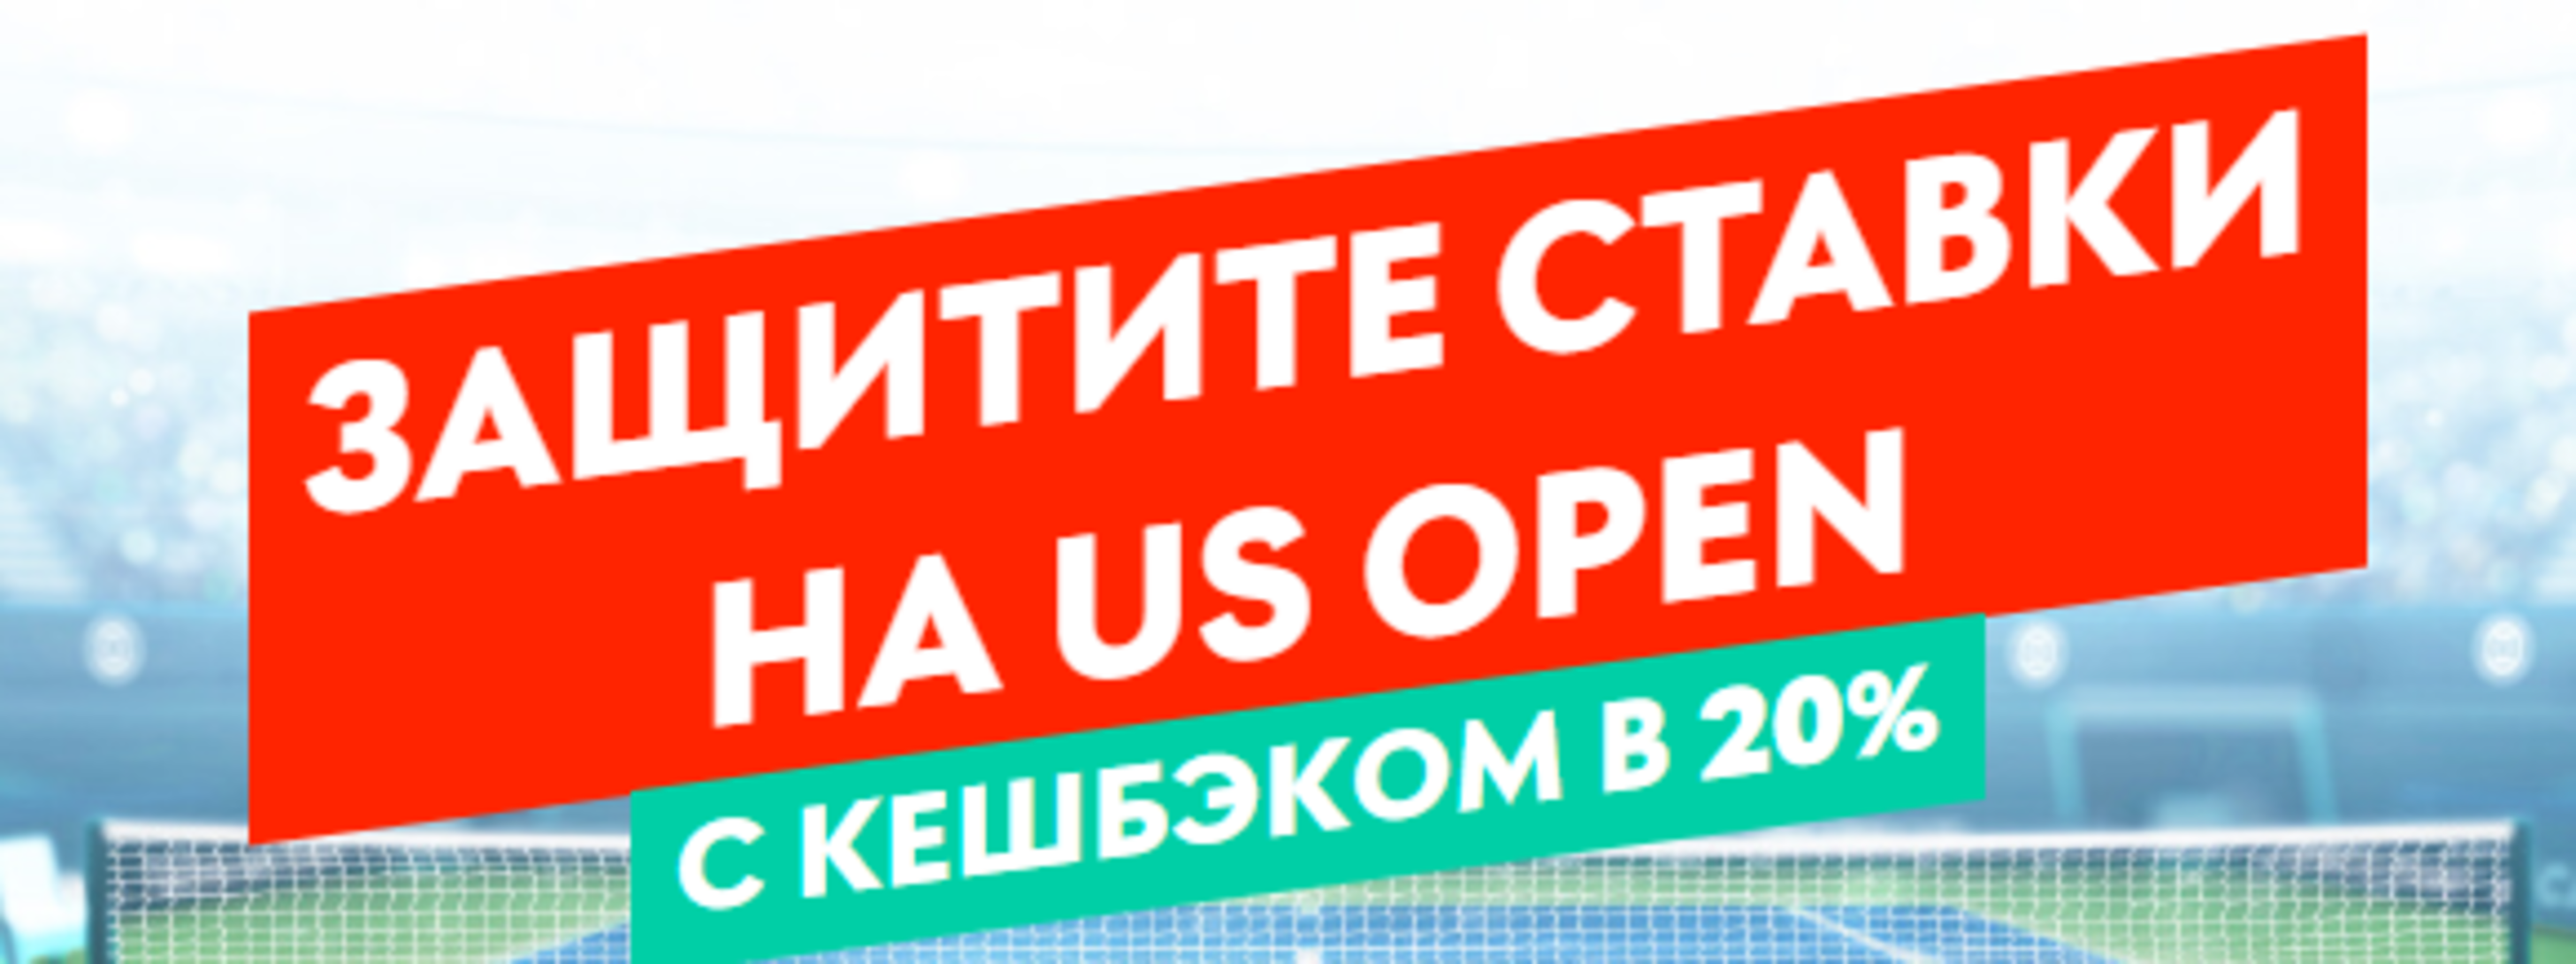 Pin-Up.kz предлагает кэшбэк 20% на ставки US Open